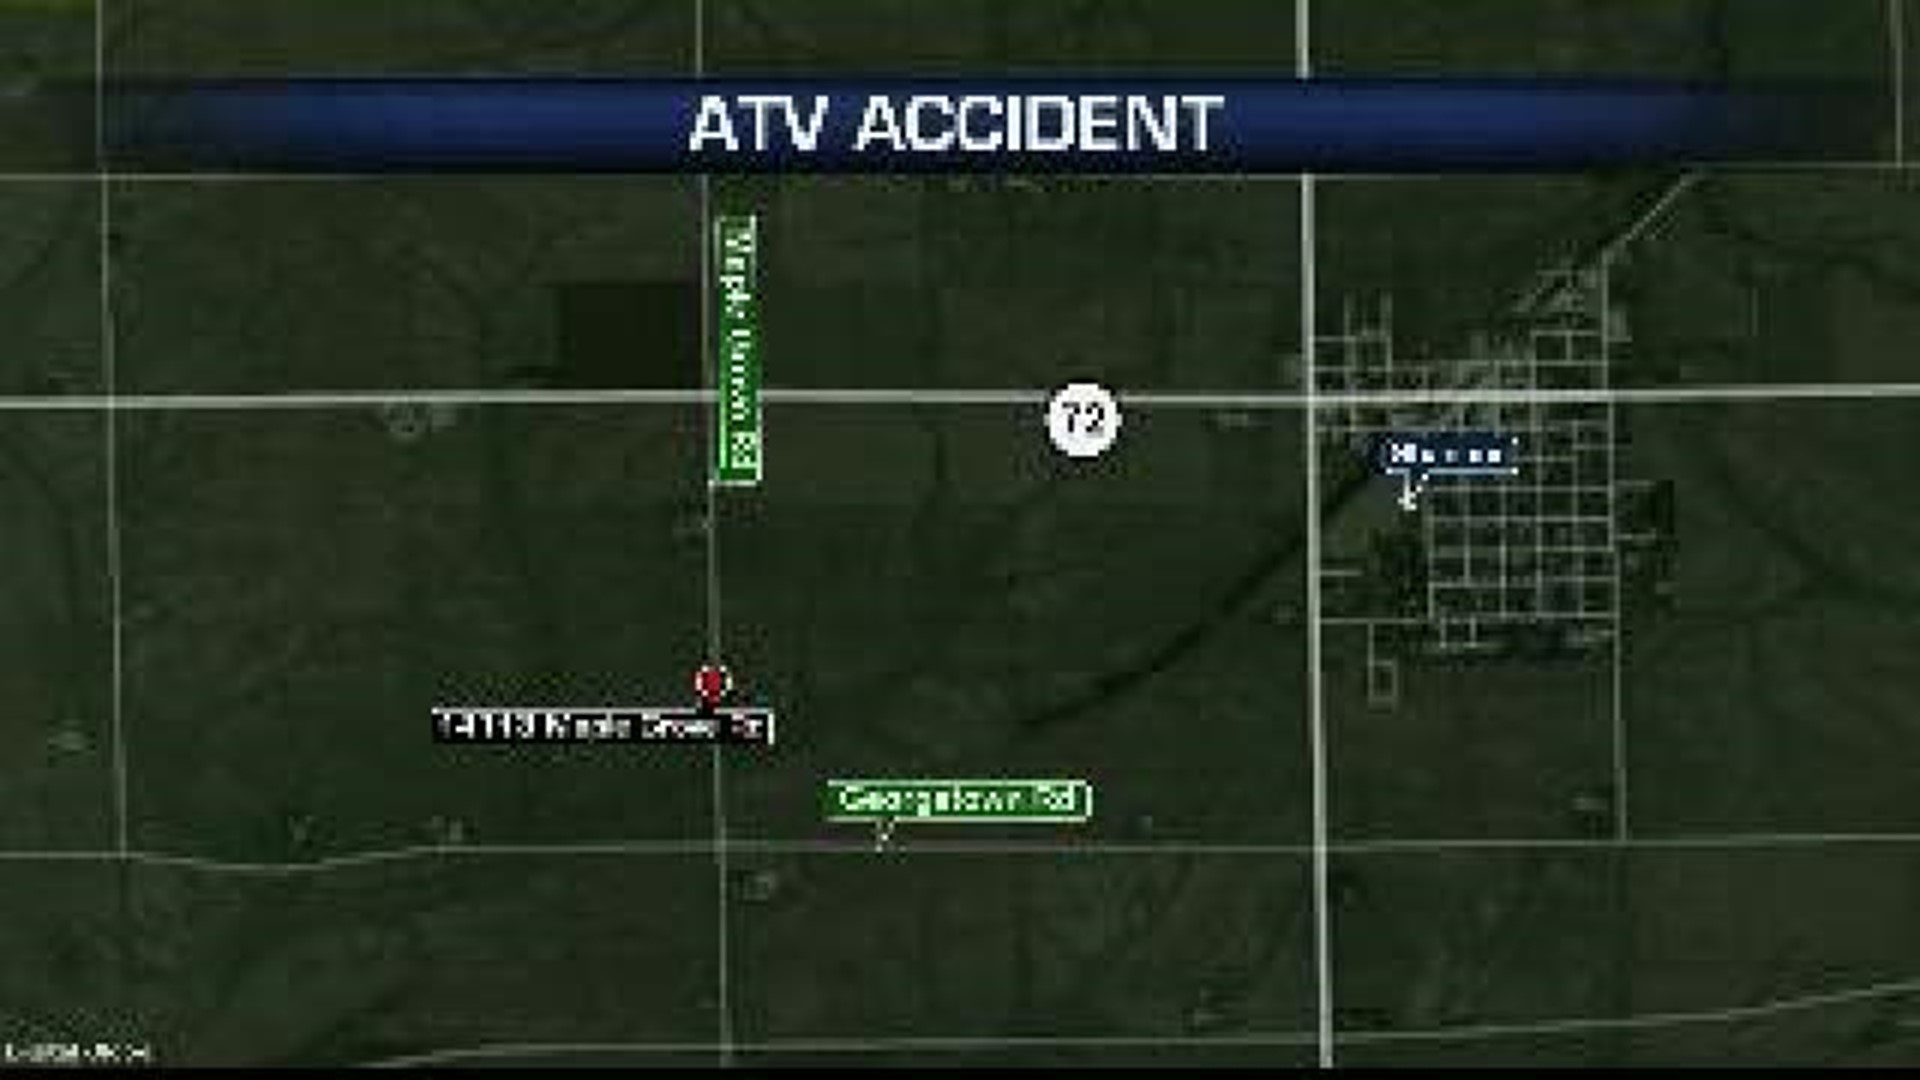 Man killed in ATV accident